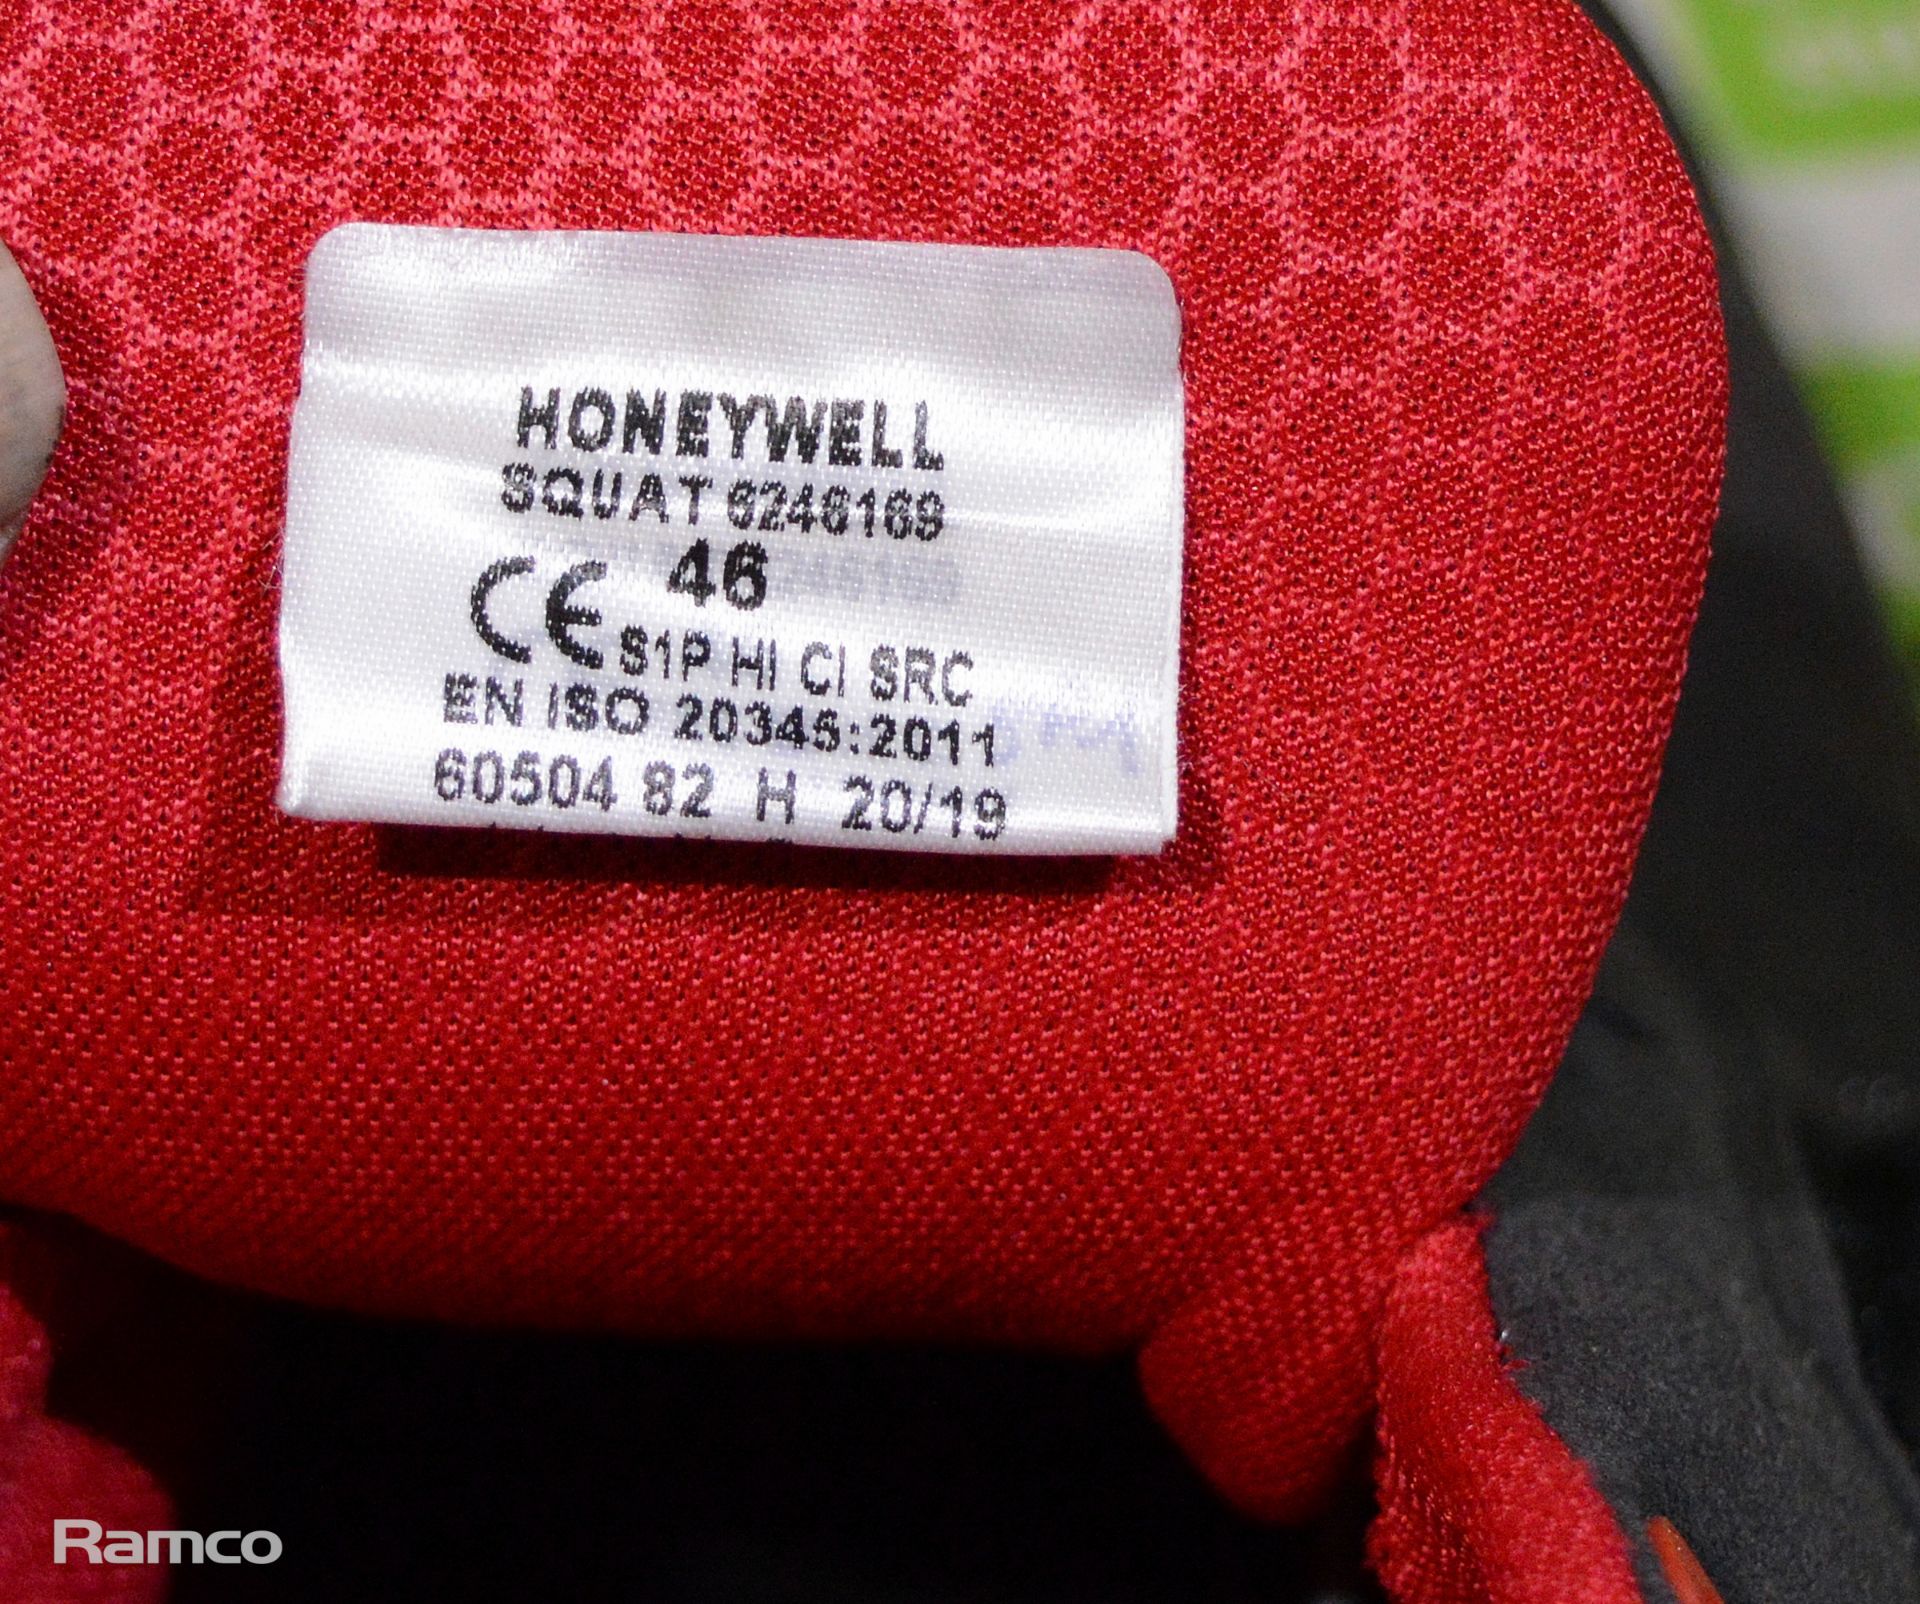 Honeywell squat safety trainers - size UK 11 - Image 2 of 3